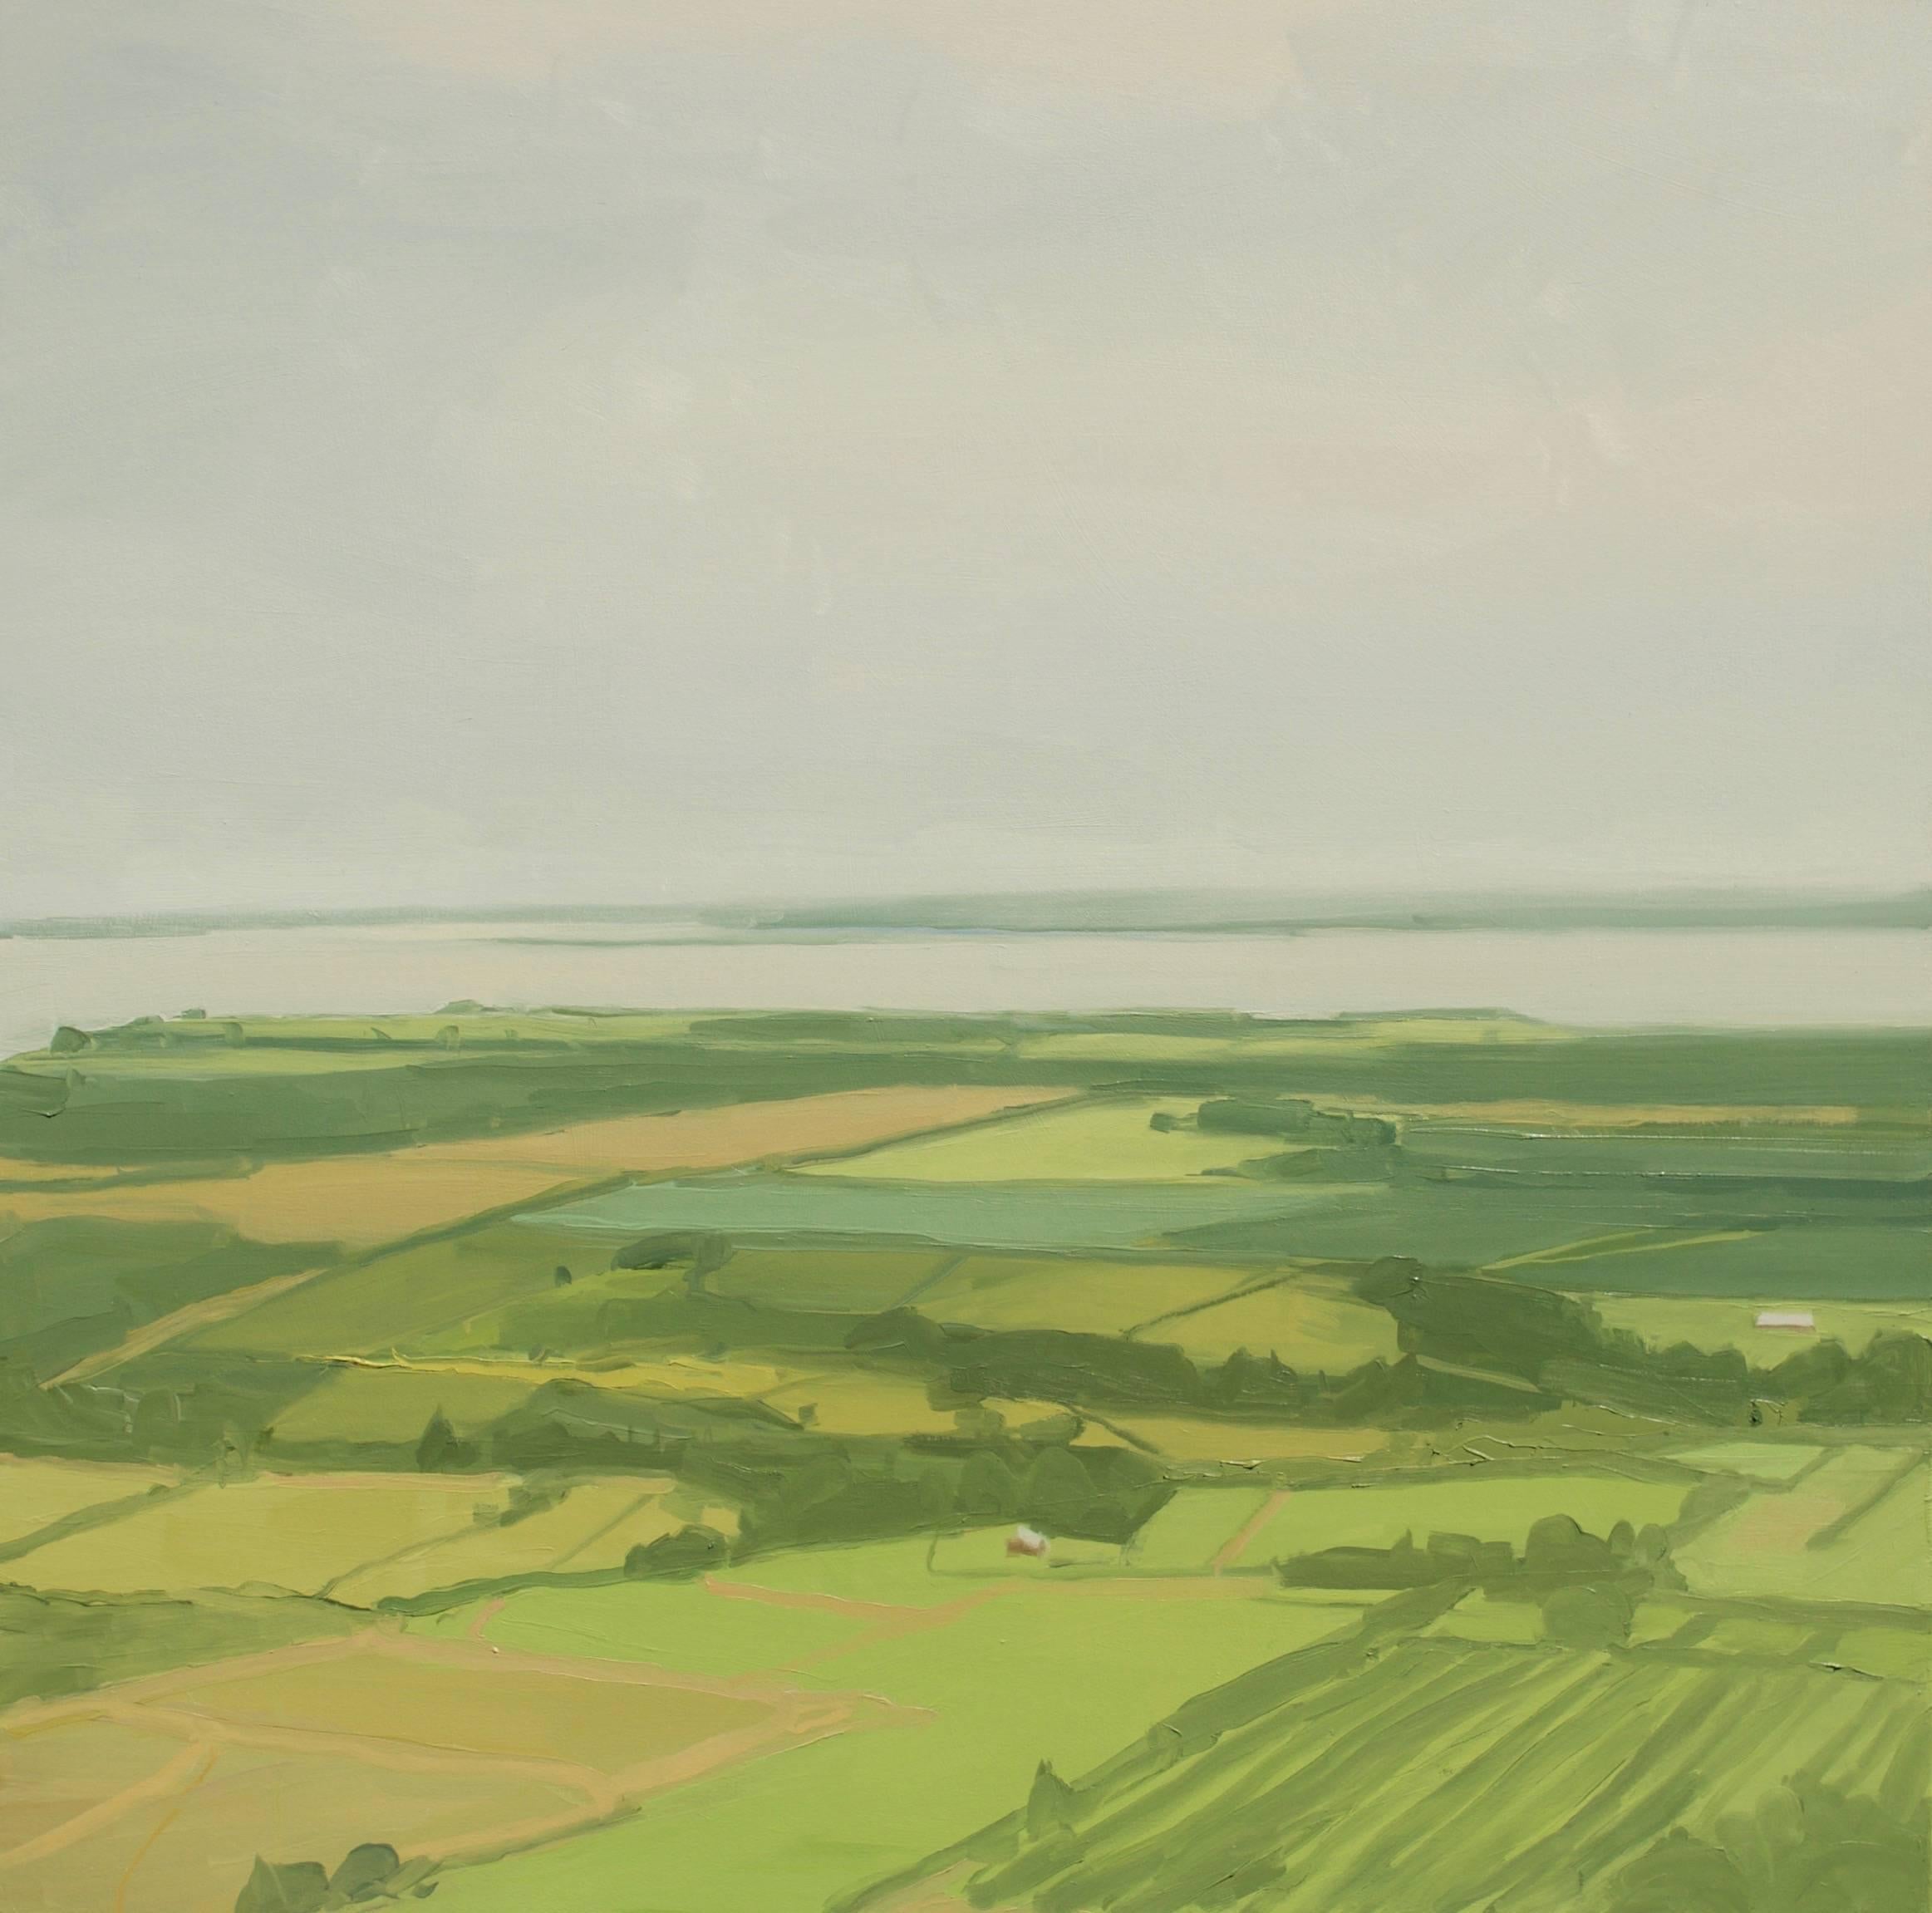 Sara MacCulloch Landscape Painting - Sara McCulloch "Look Off" -- Agricultural Landscape Oil Painting on Canvas